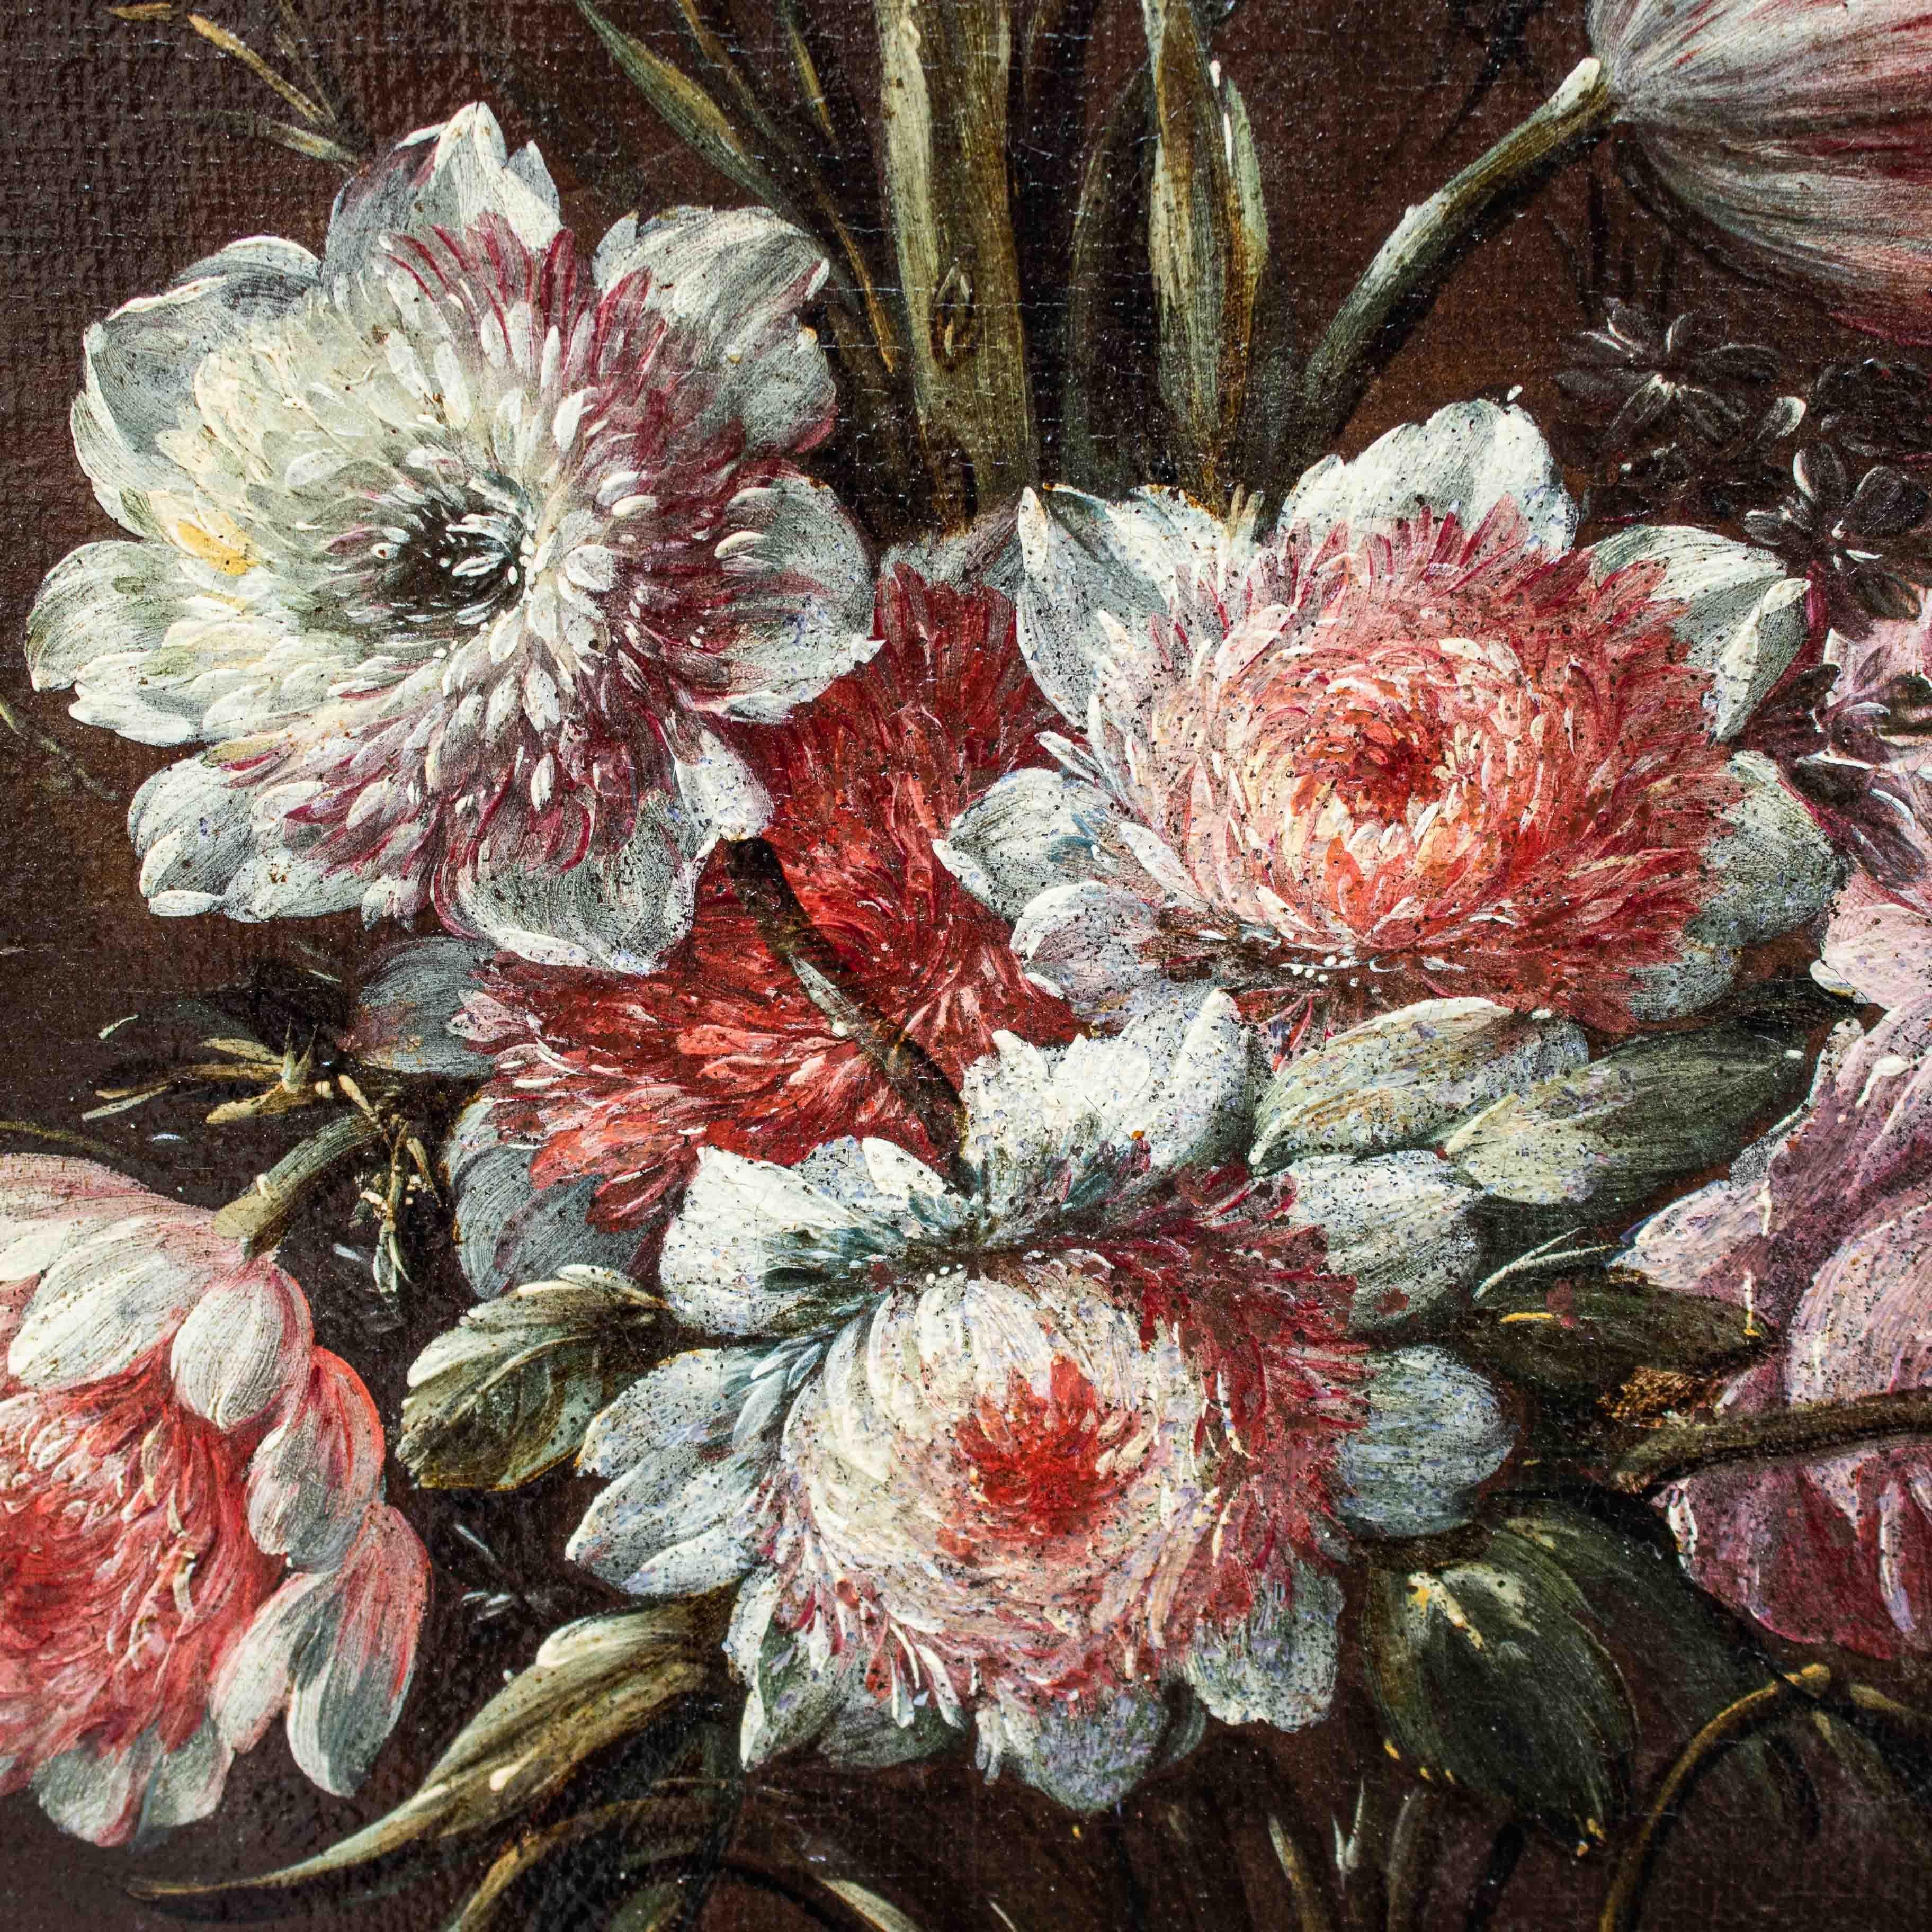 Italian 17th Century Still life with vase of flowers Painting Oil on canvas Neapolitan